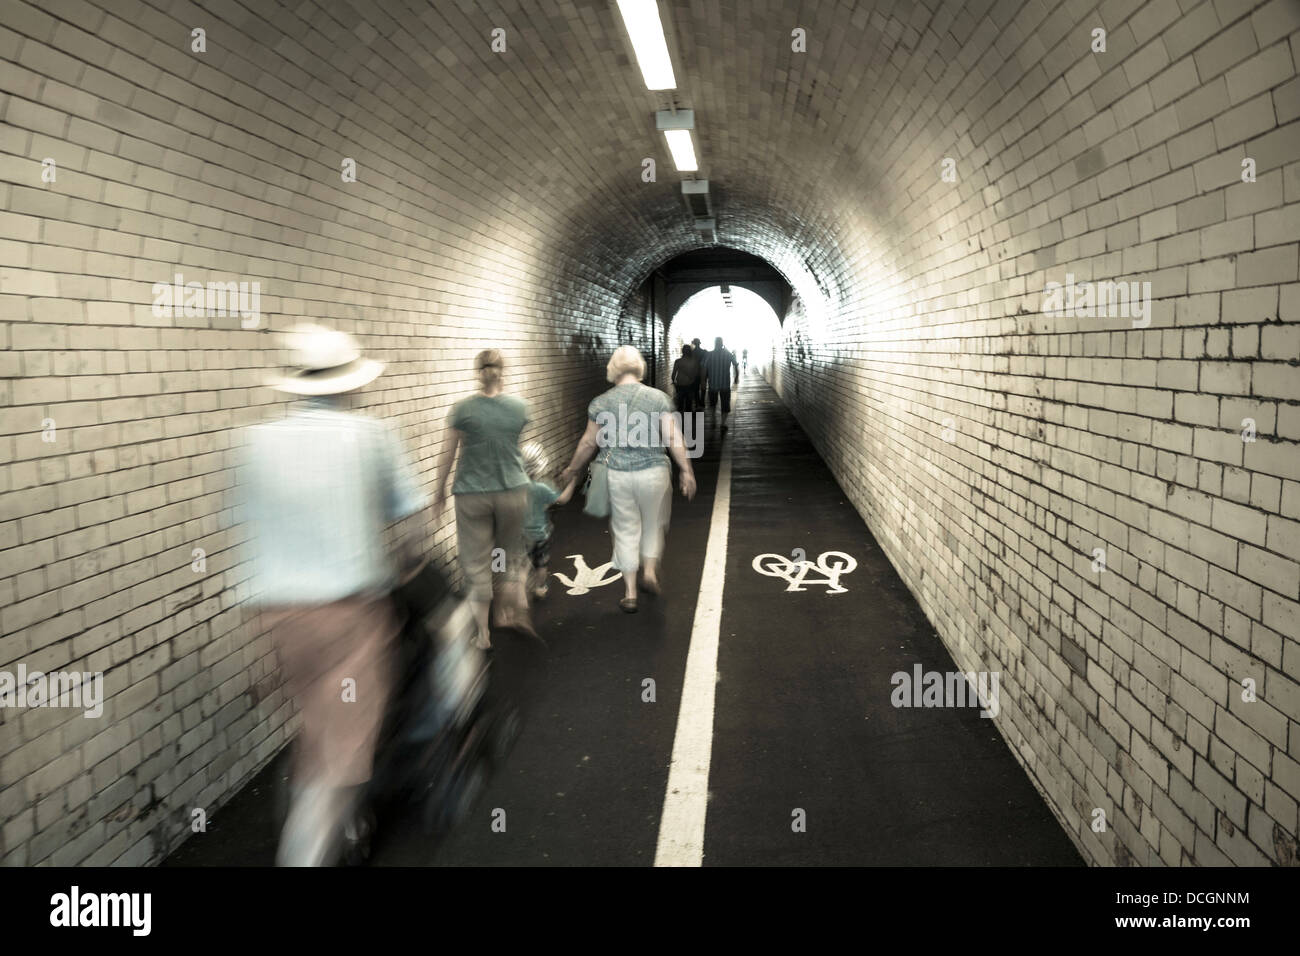 Blur blurred blurry movement motion people pedestrians walking through a tunnel underground tube underpass Stock Photo